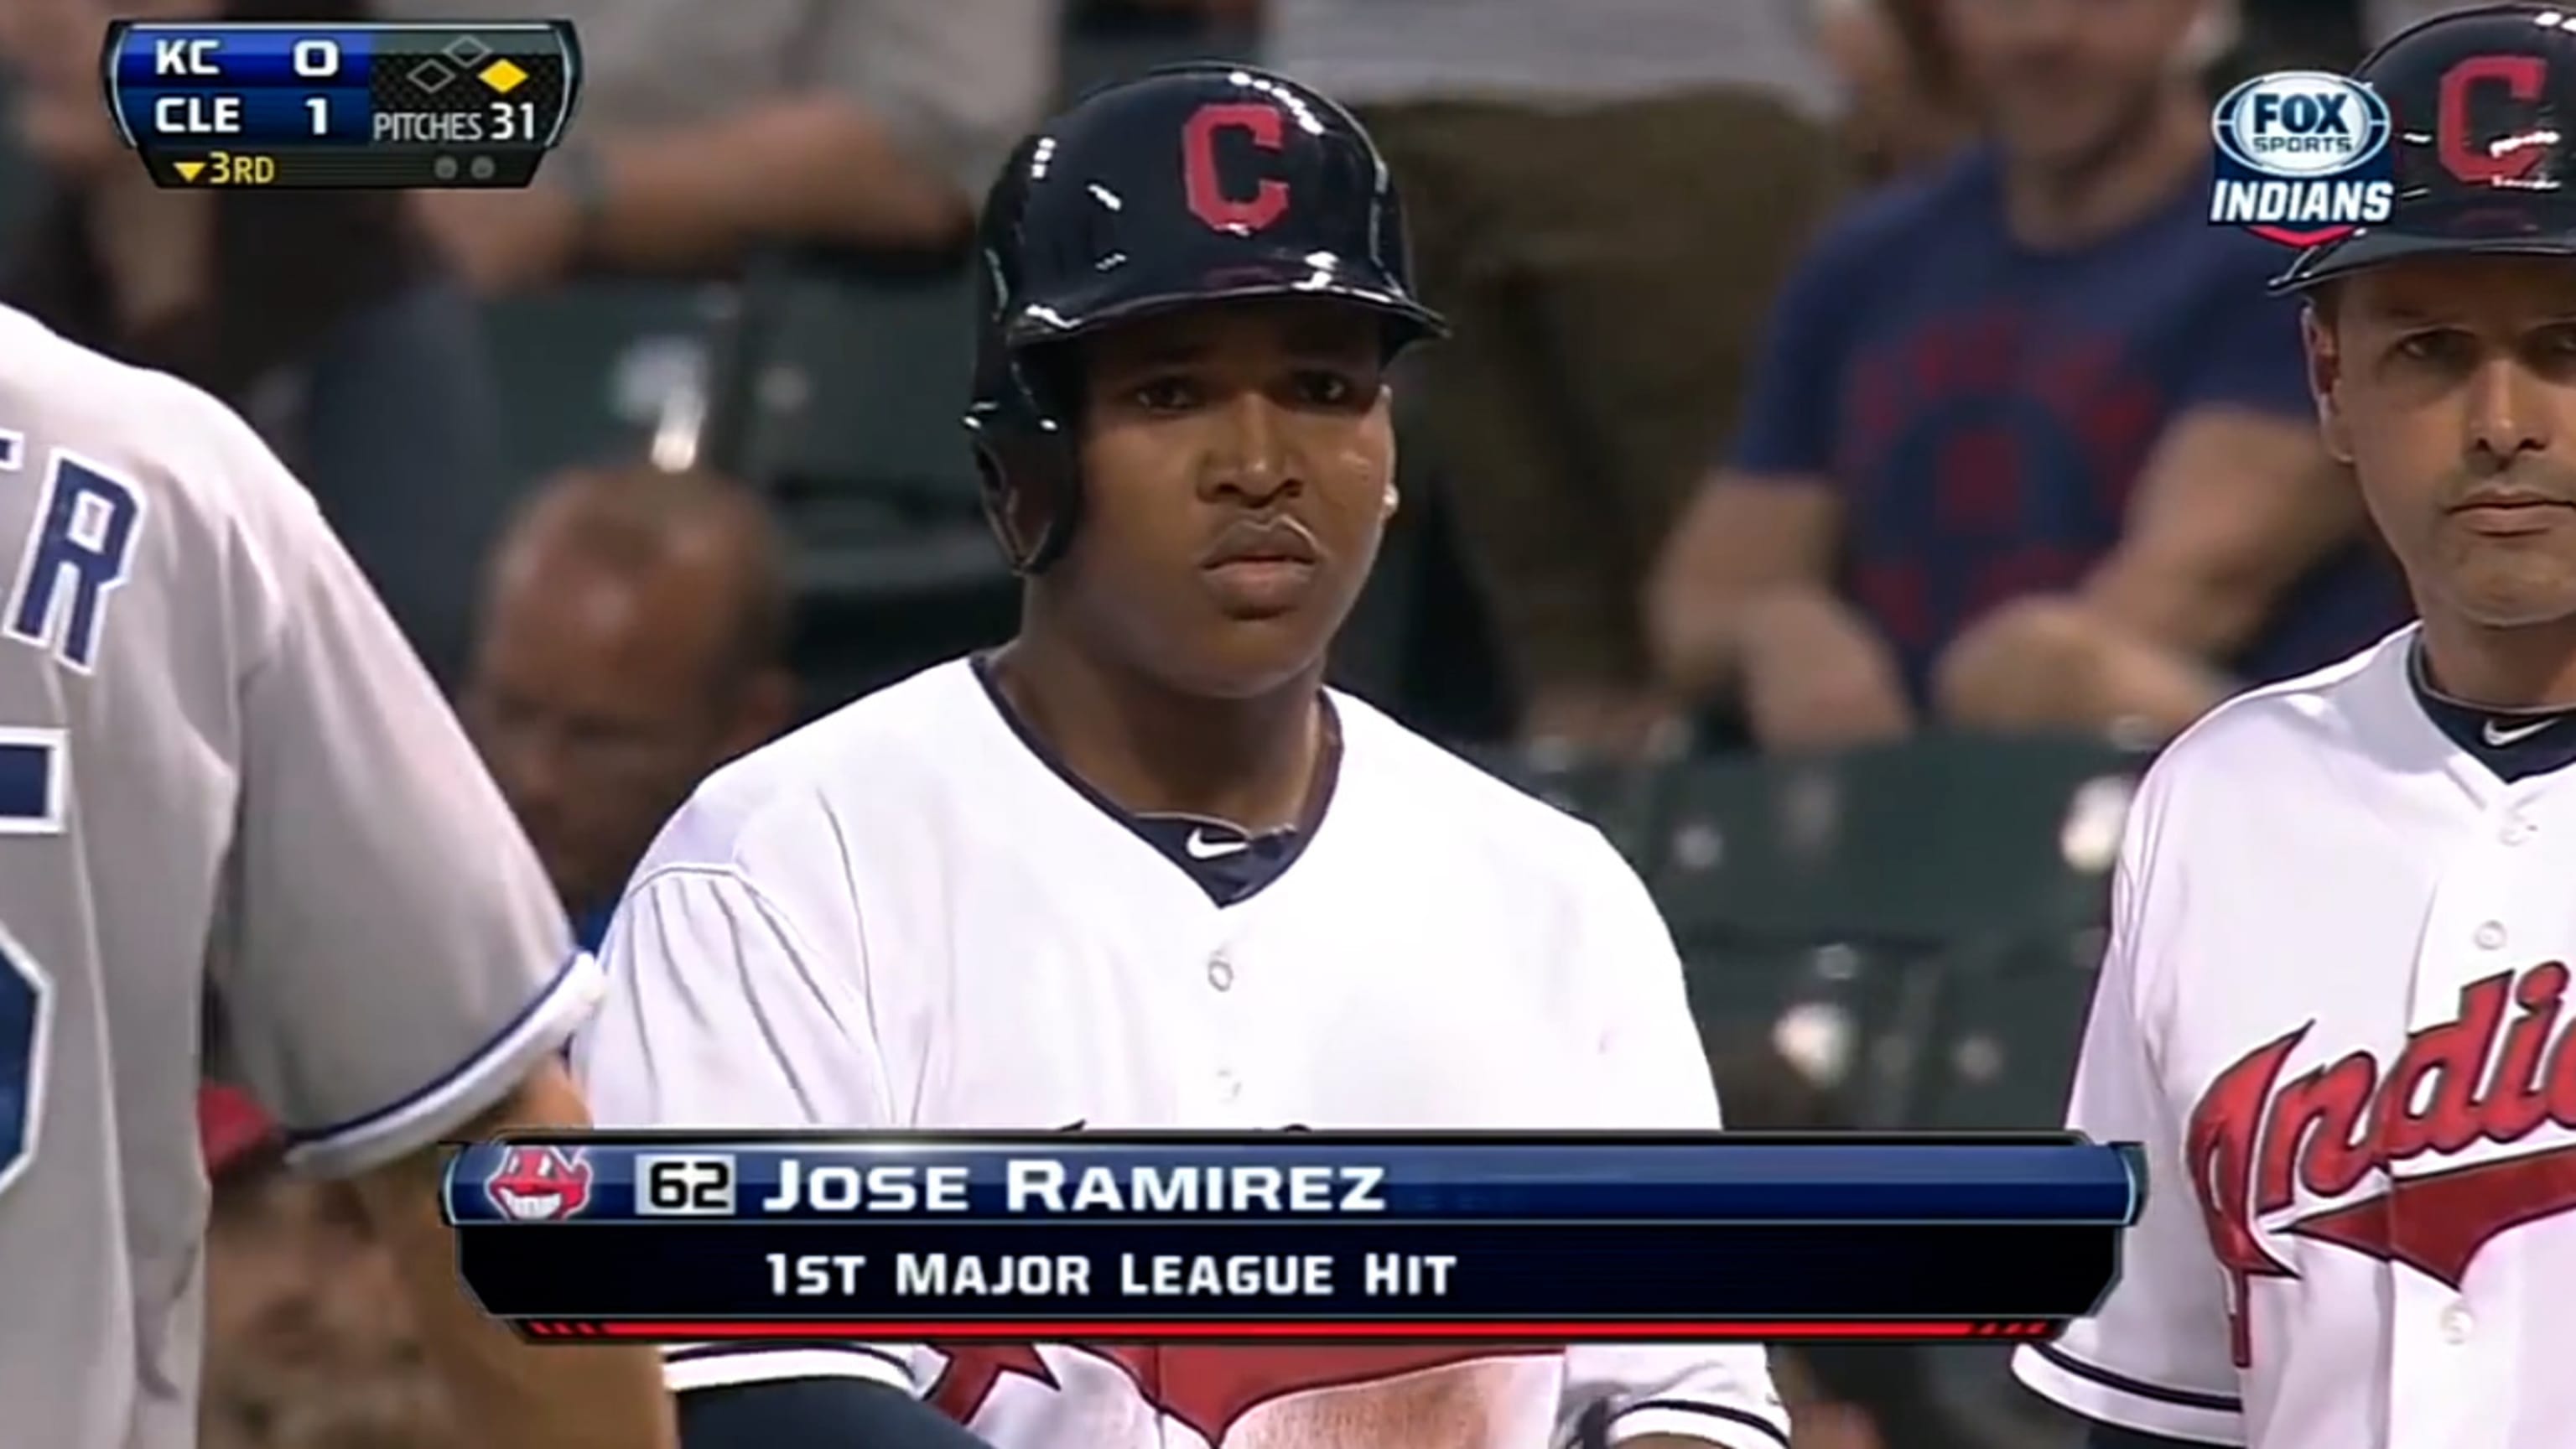 Ramírez's first career MLB hit